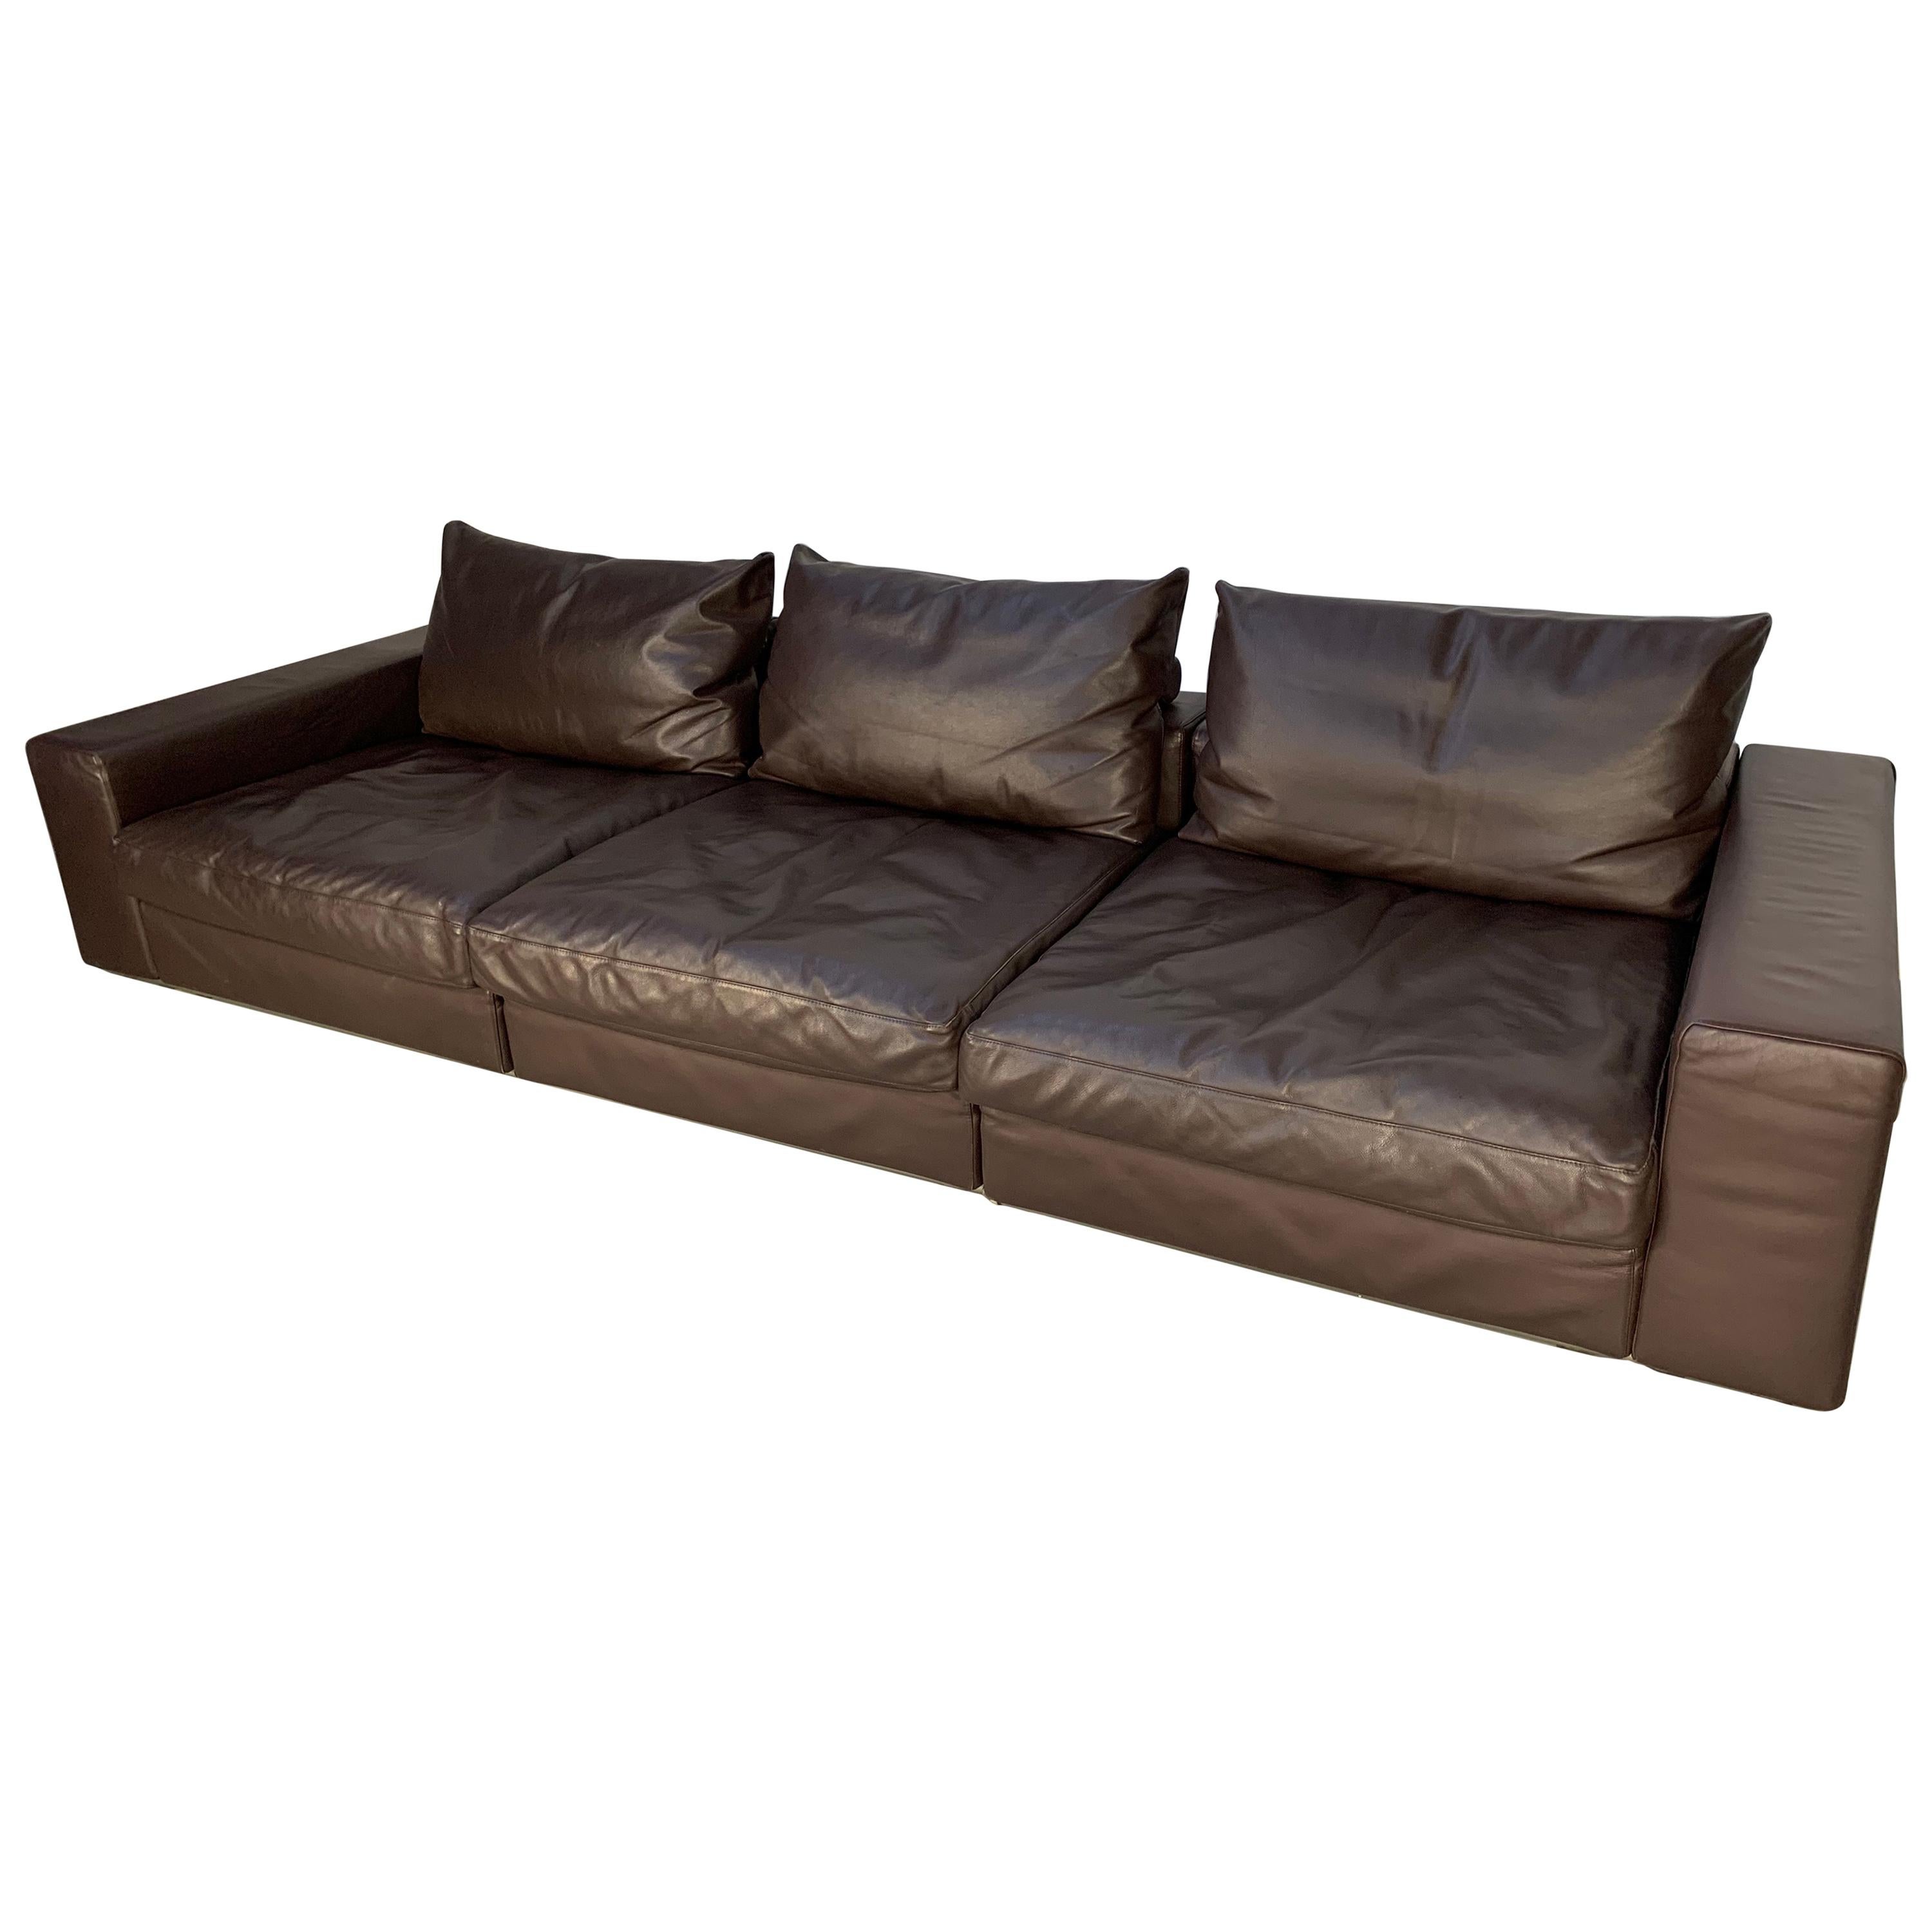 Flexform "Groundpiece" Sofa in Brown "Pelle De Lux" Leather